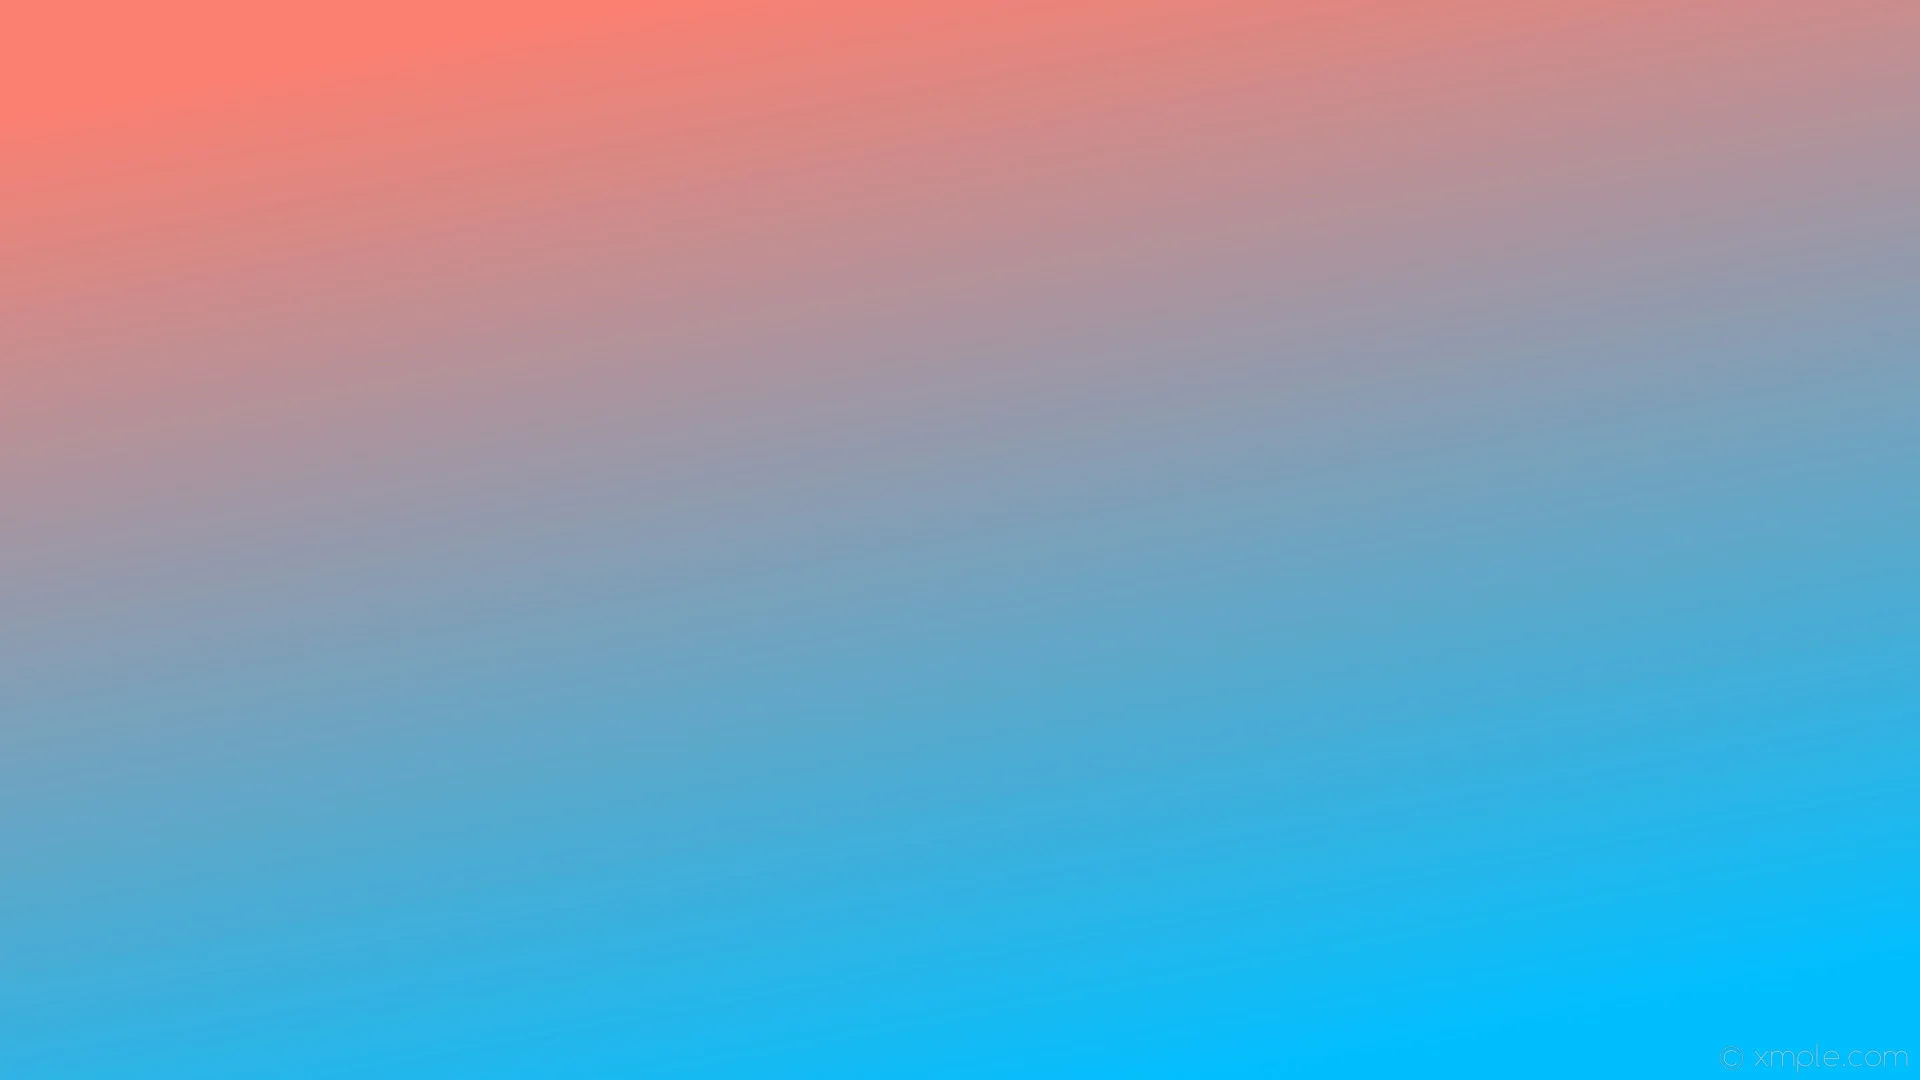 Wallpaper red linear blue gradient salmon deep sky blue #fa8072 bfff 120